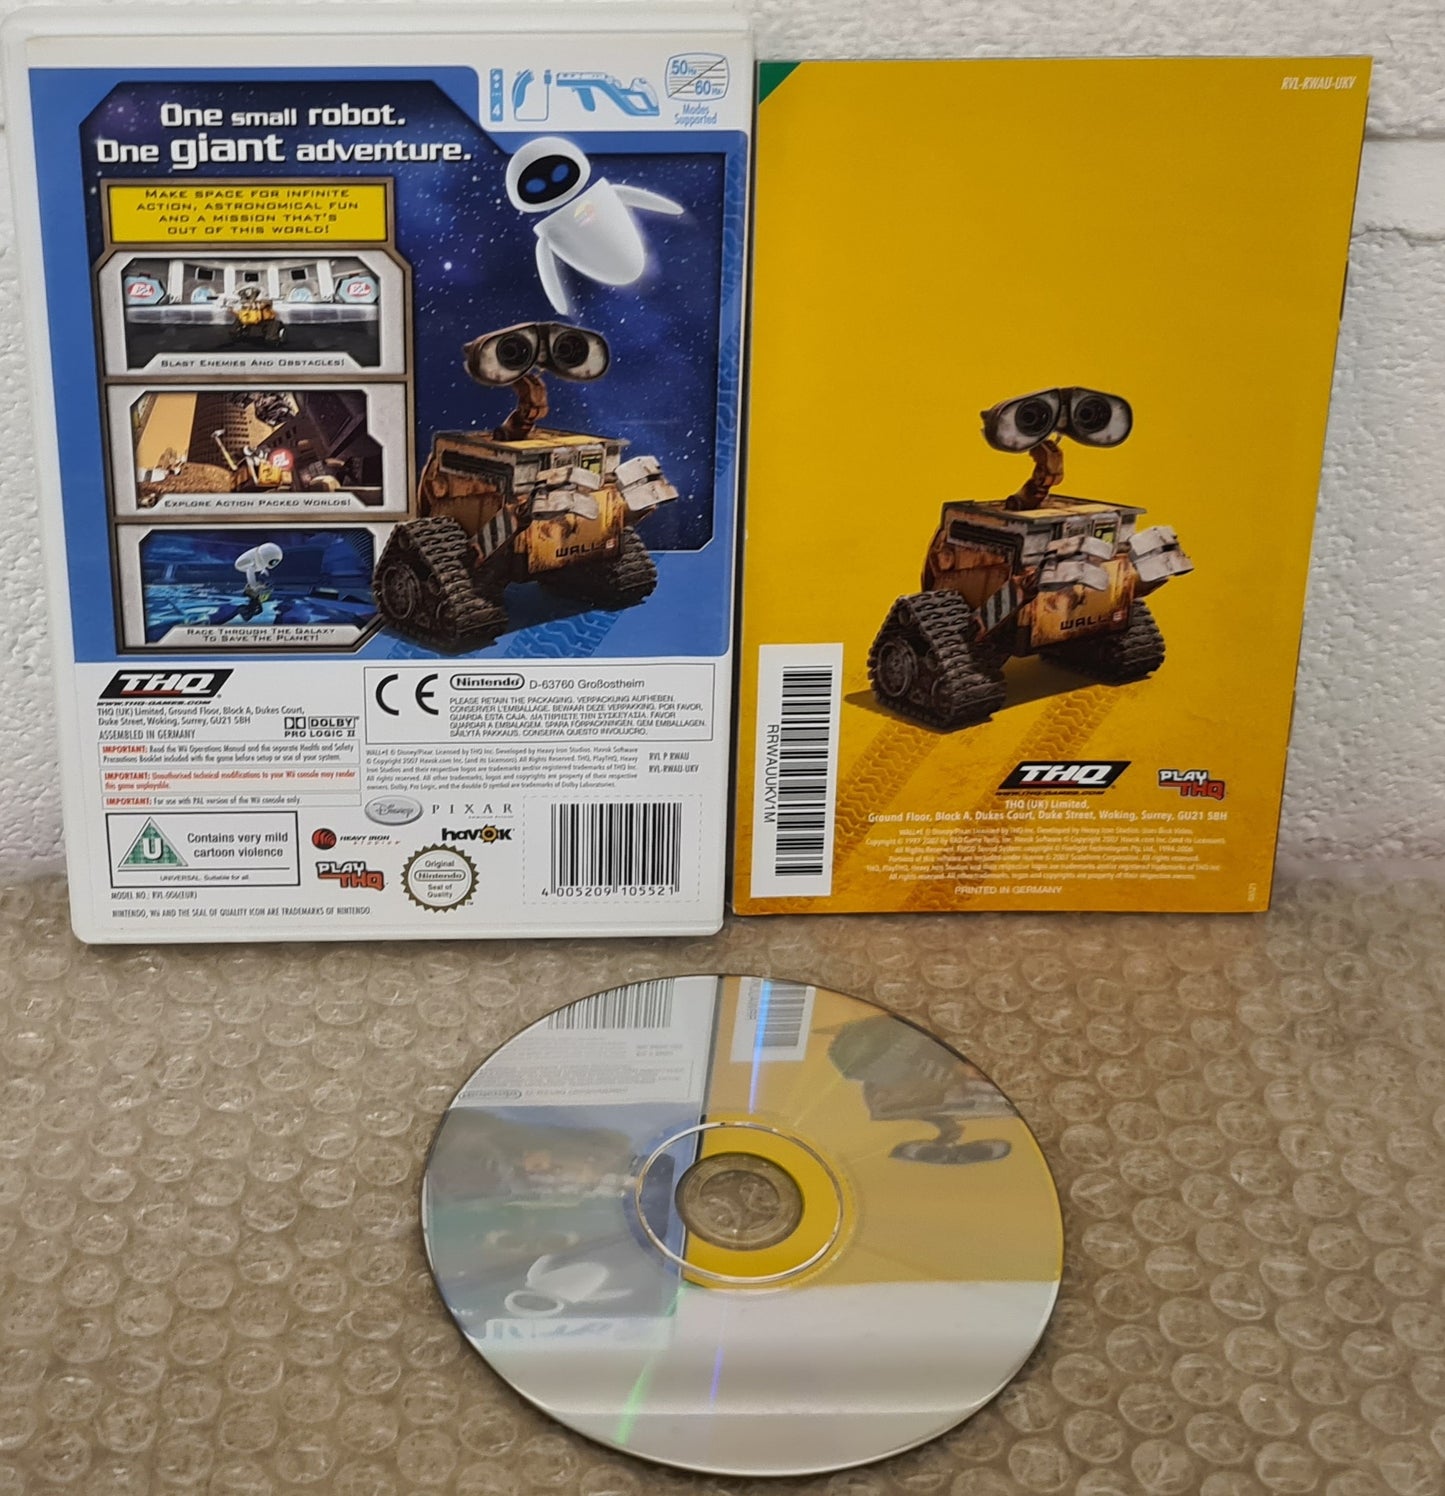 Disney Pixar Wall-E Nintendo Wii Game